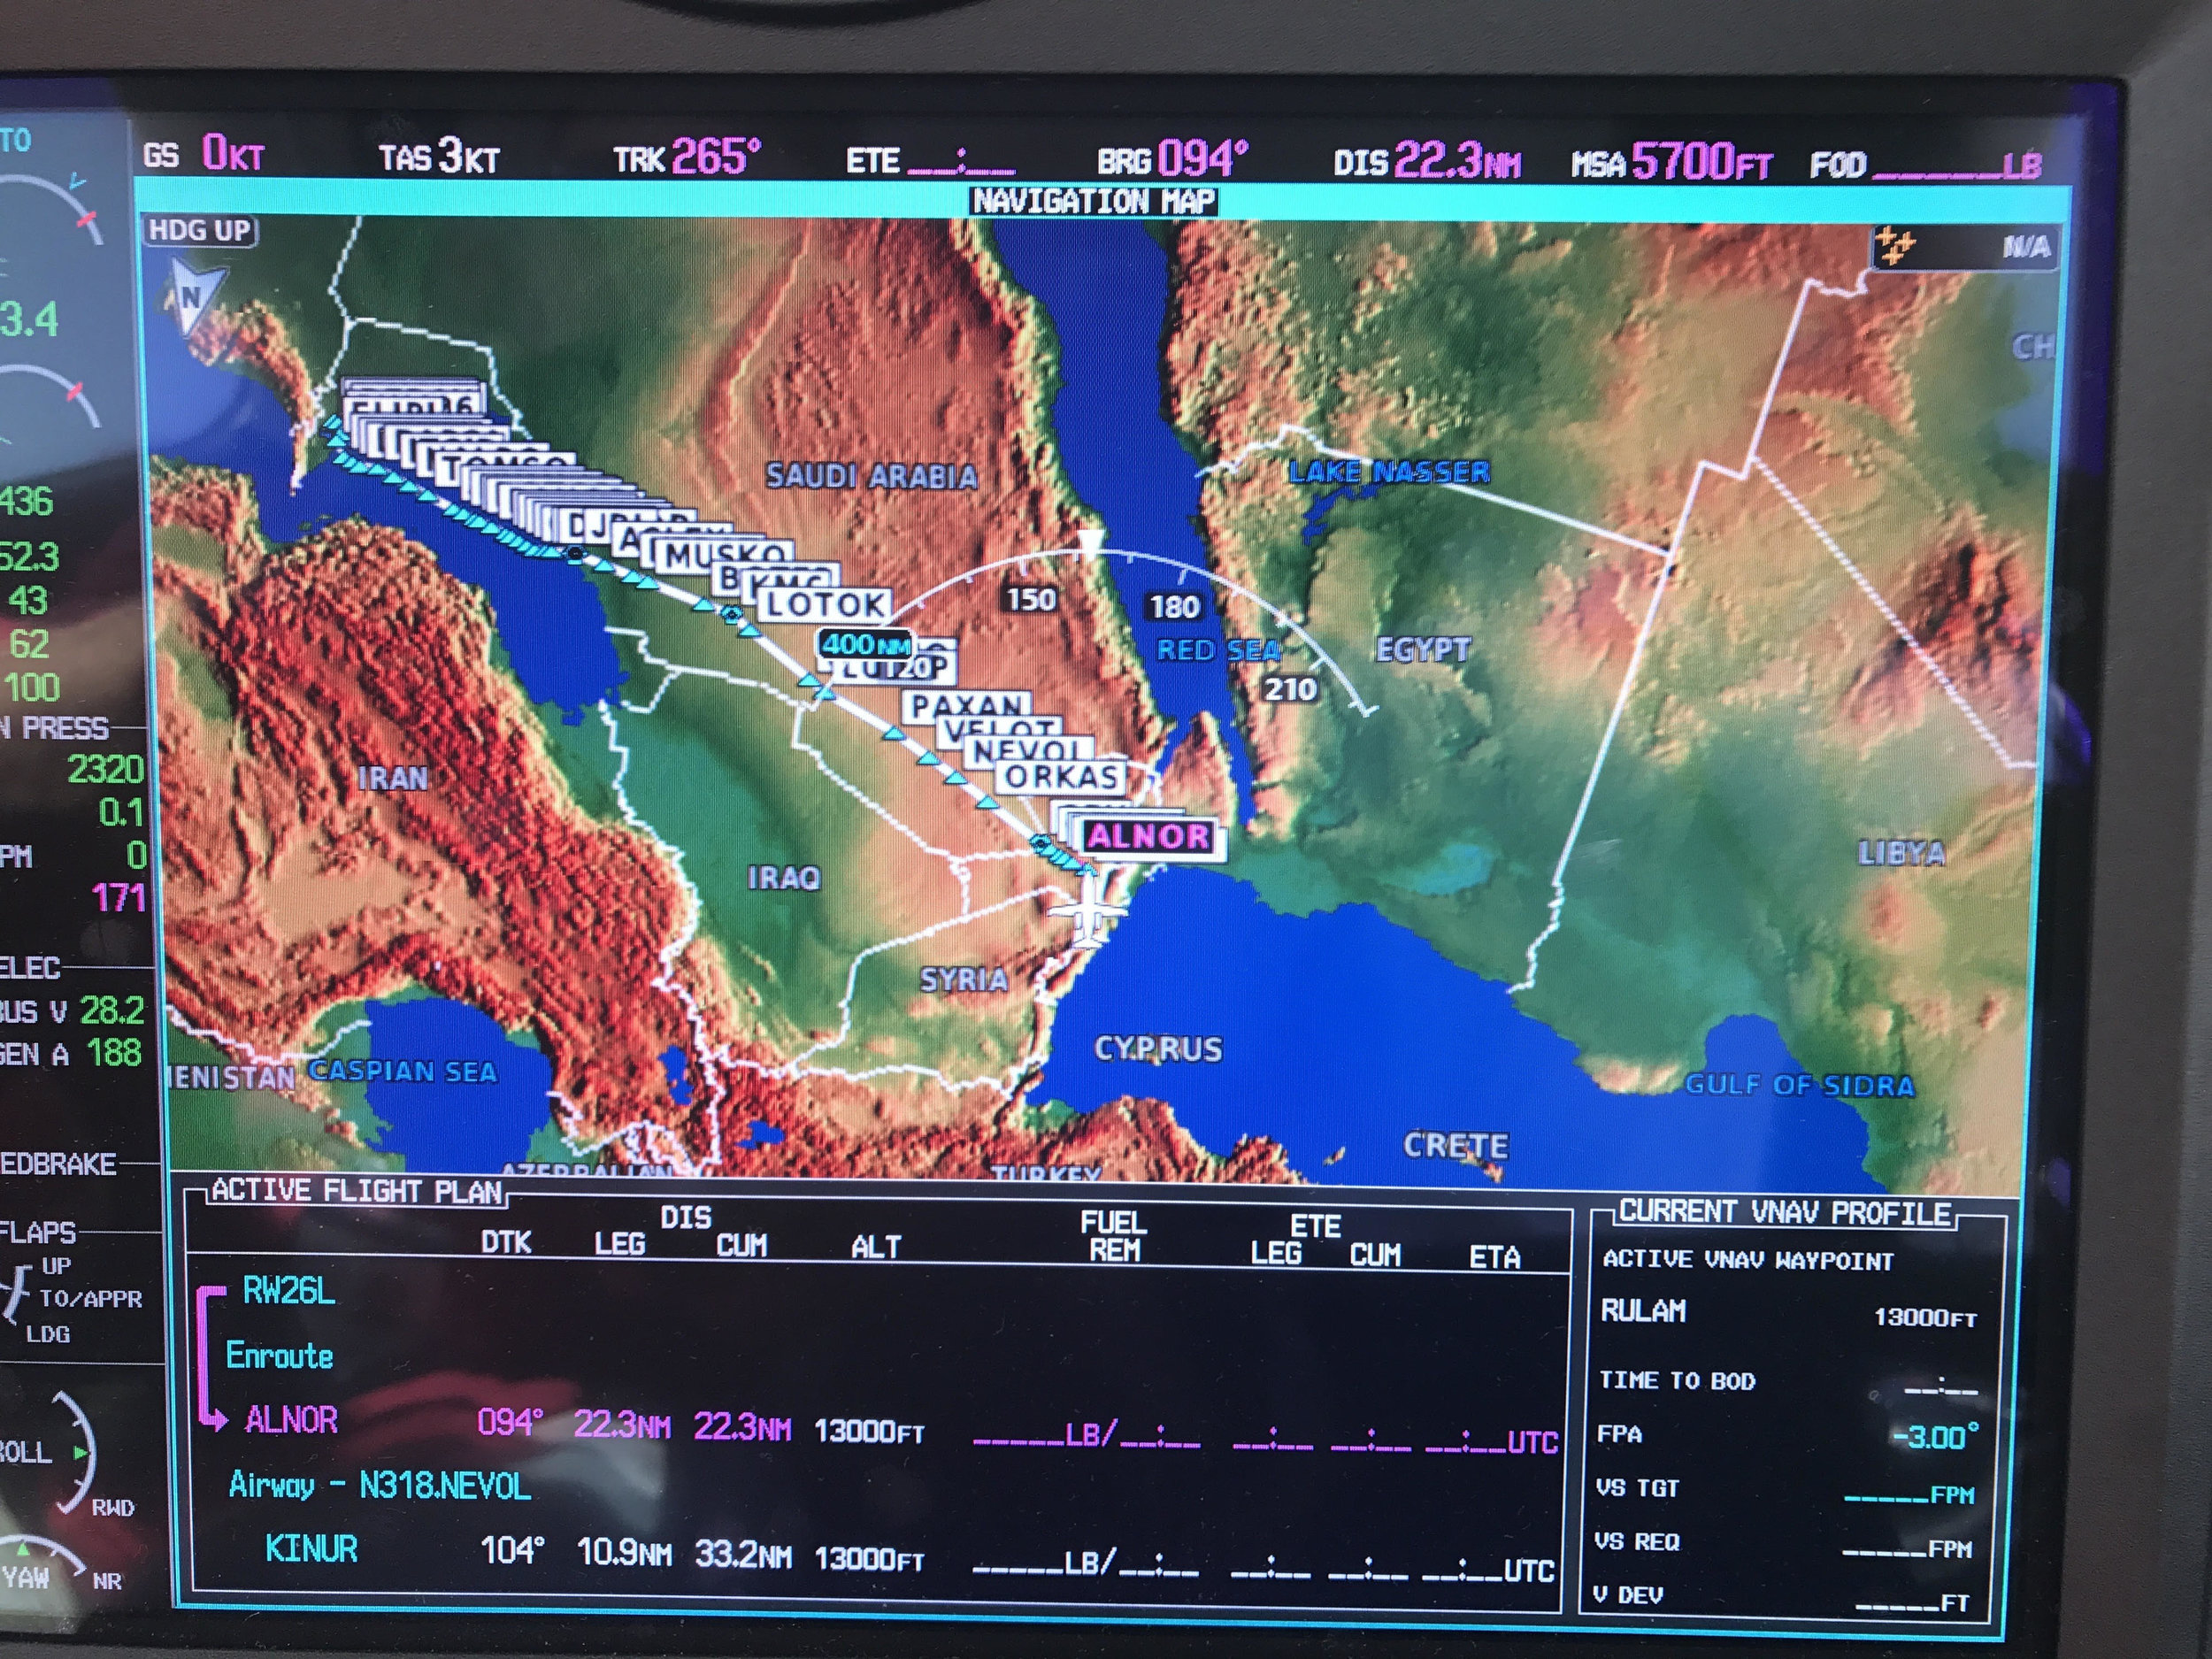  Amman, Jordan to Dubai, UAE World Speed Record set!&nbsp; Down the Persian Gulf 2 miles outside of Iranian airspace. 